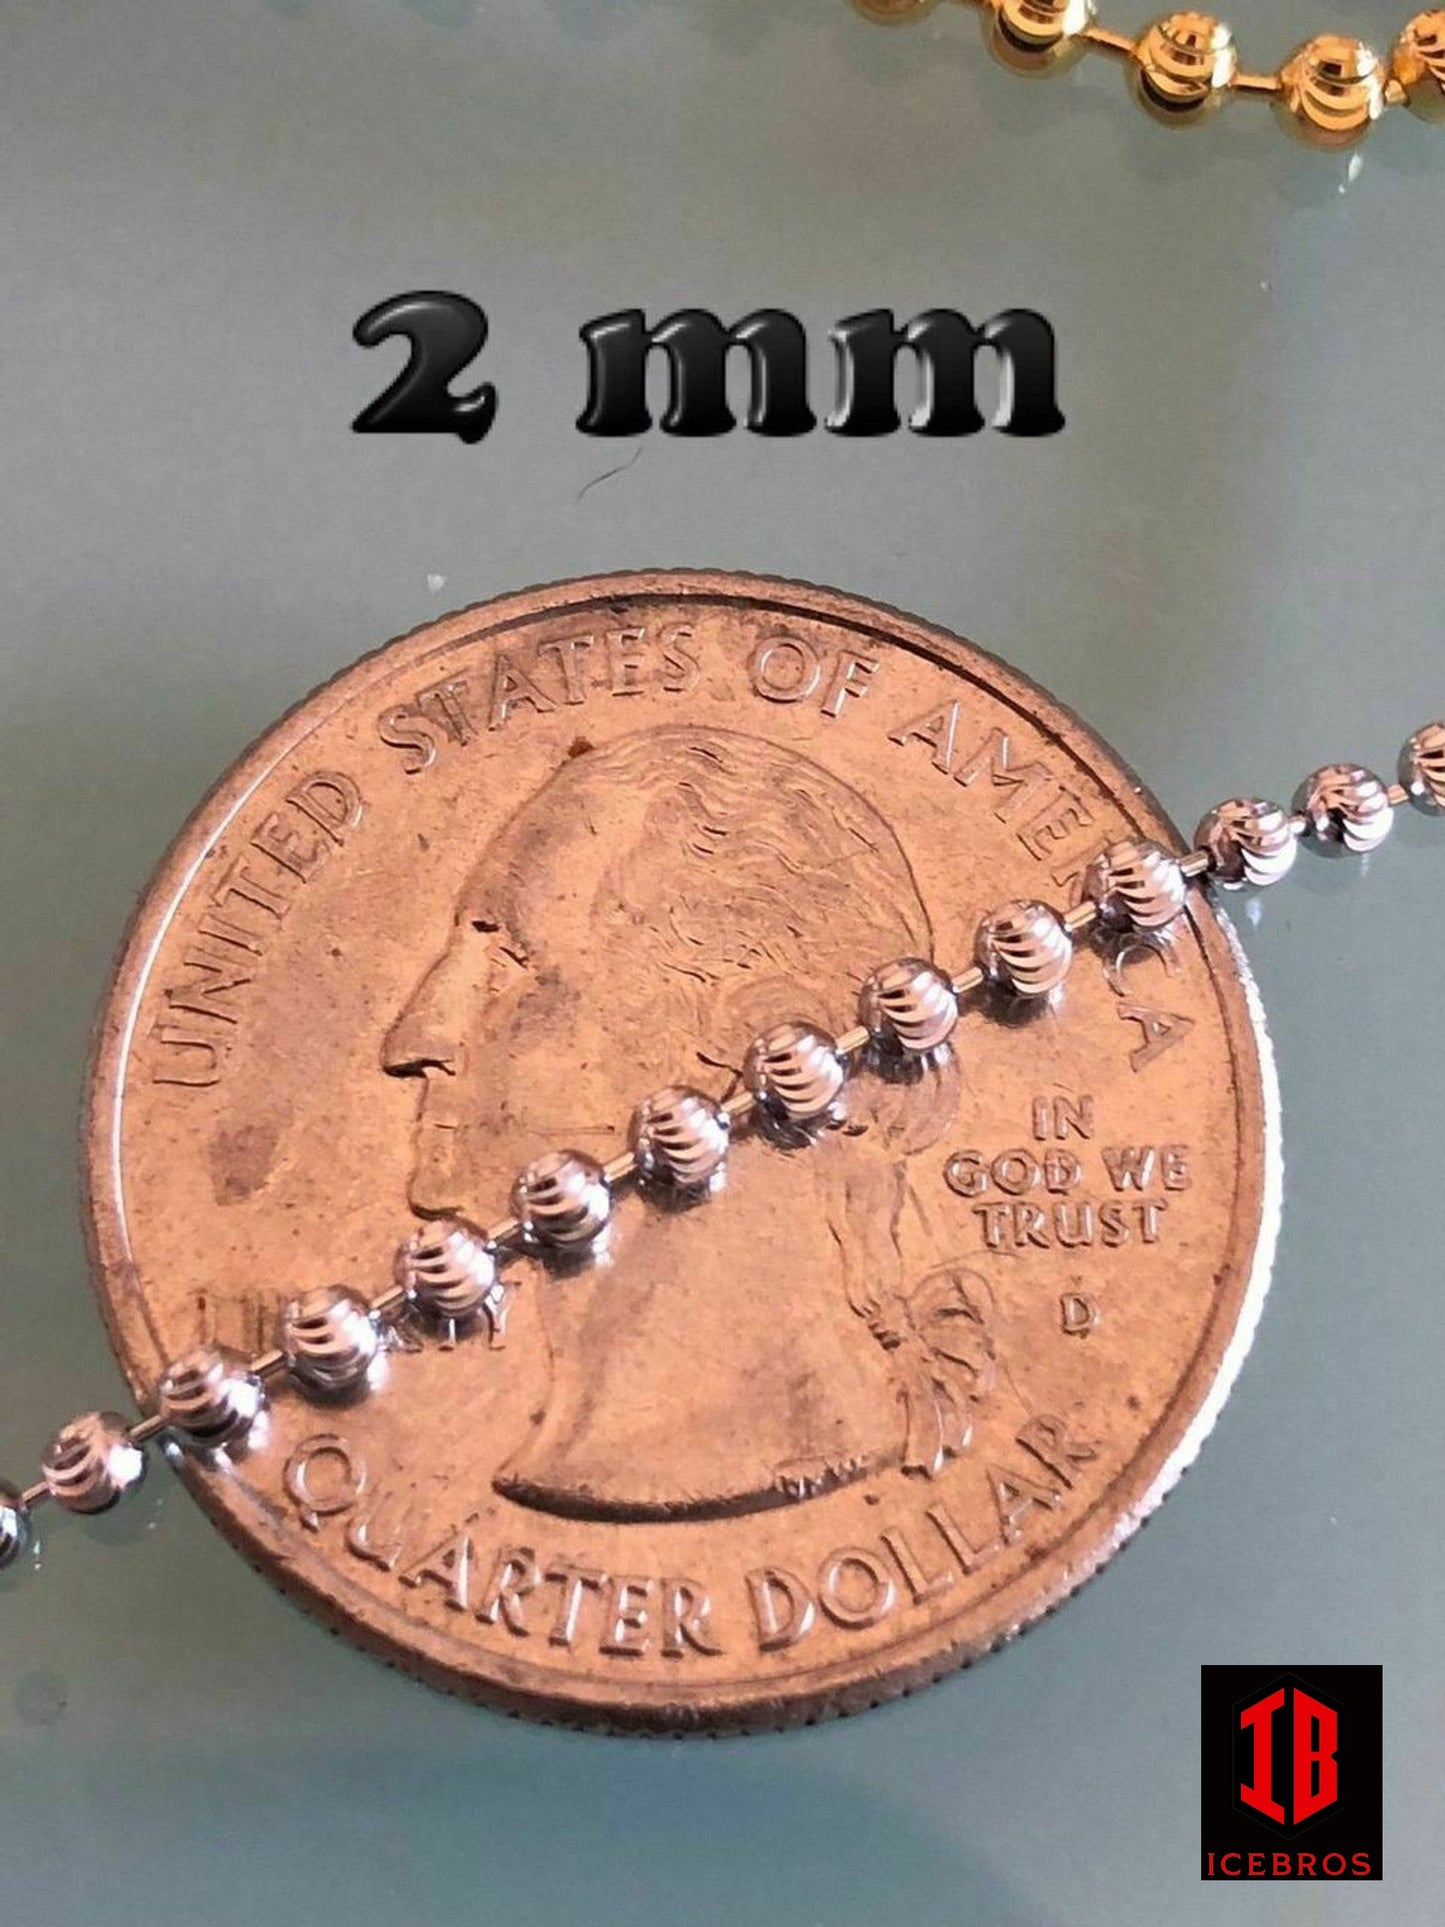 Ball Moon Chain REAL 925 Silver 14k Yellow Gold / Rhodium Diamond Cut Men Women (2-5mm)